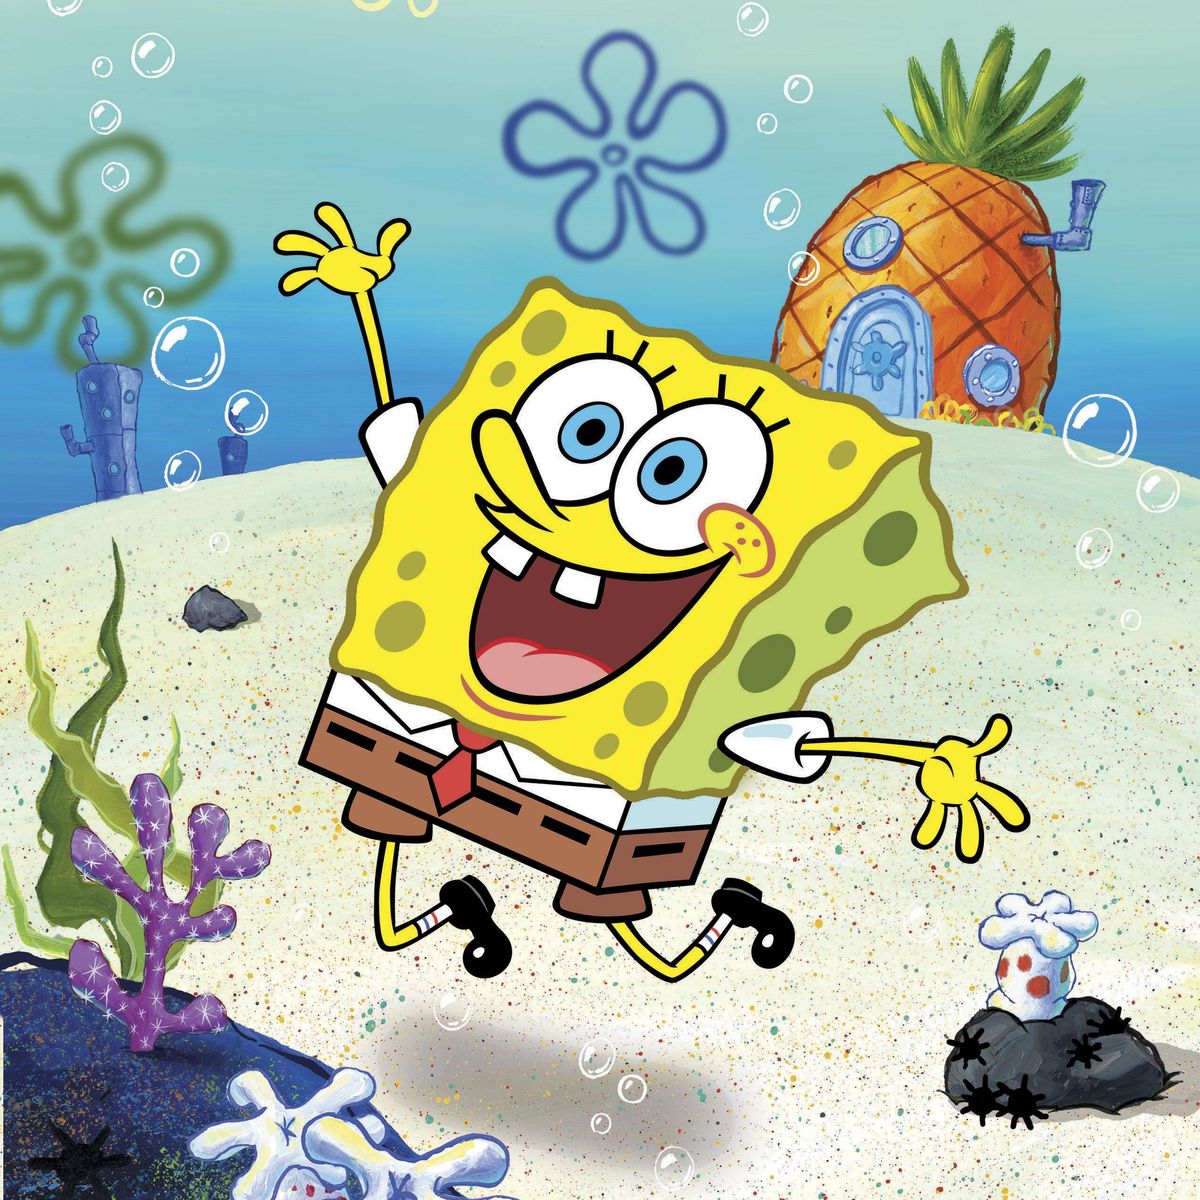 Spongebob Squarepants And Stephen Hillenburg S Legacy